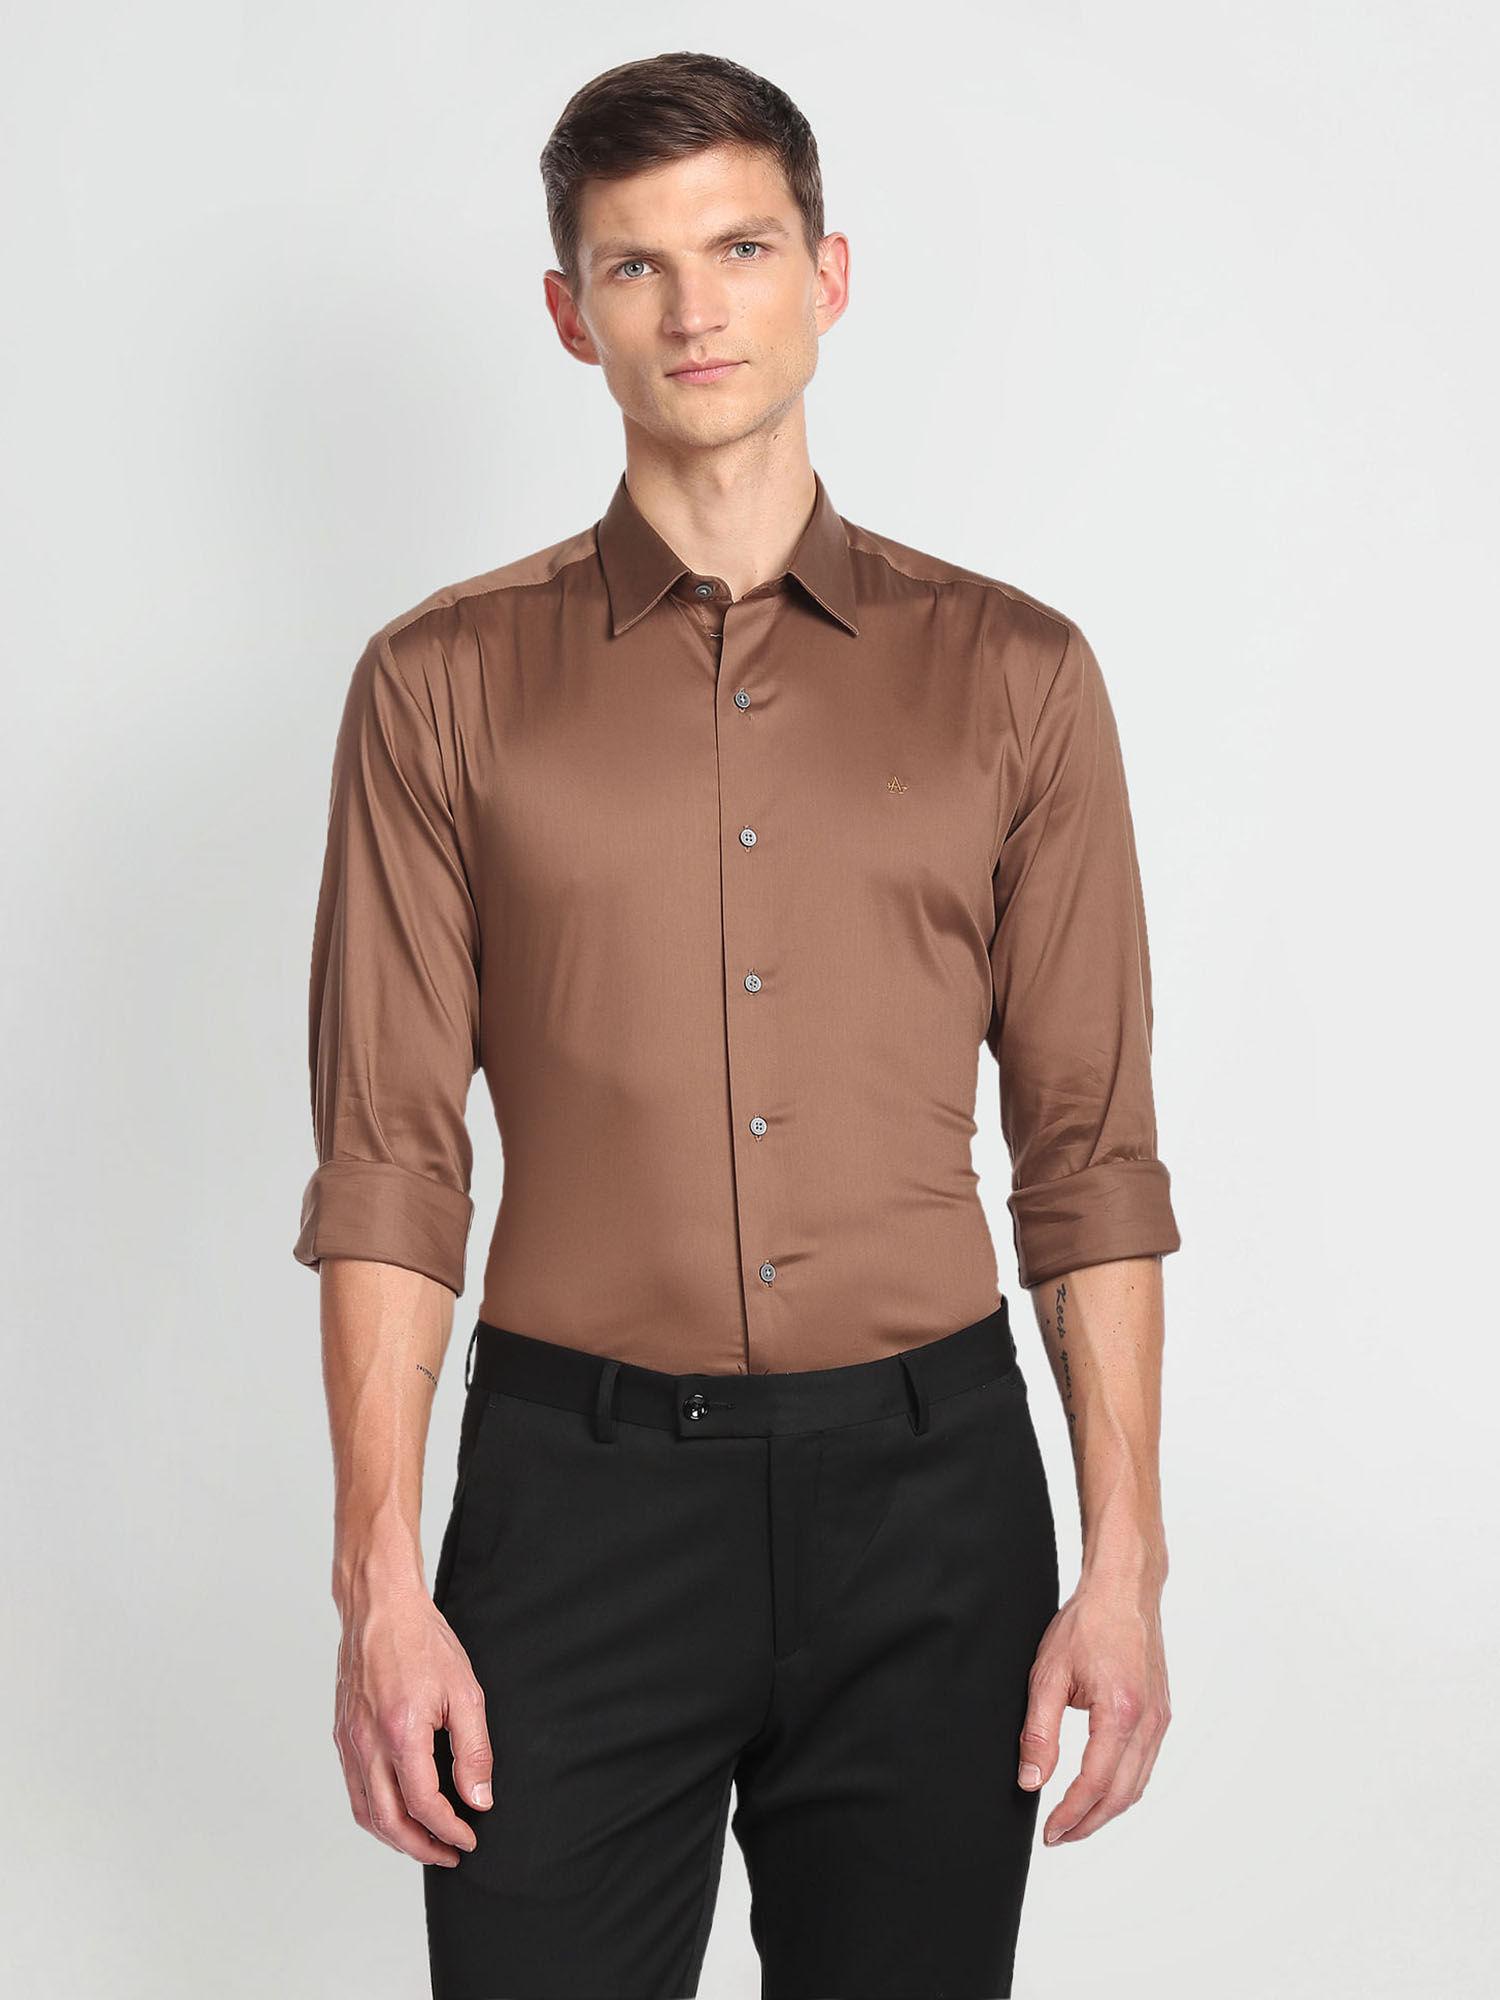 brown satin solid formal shirt